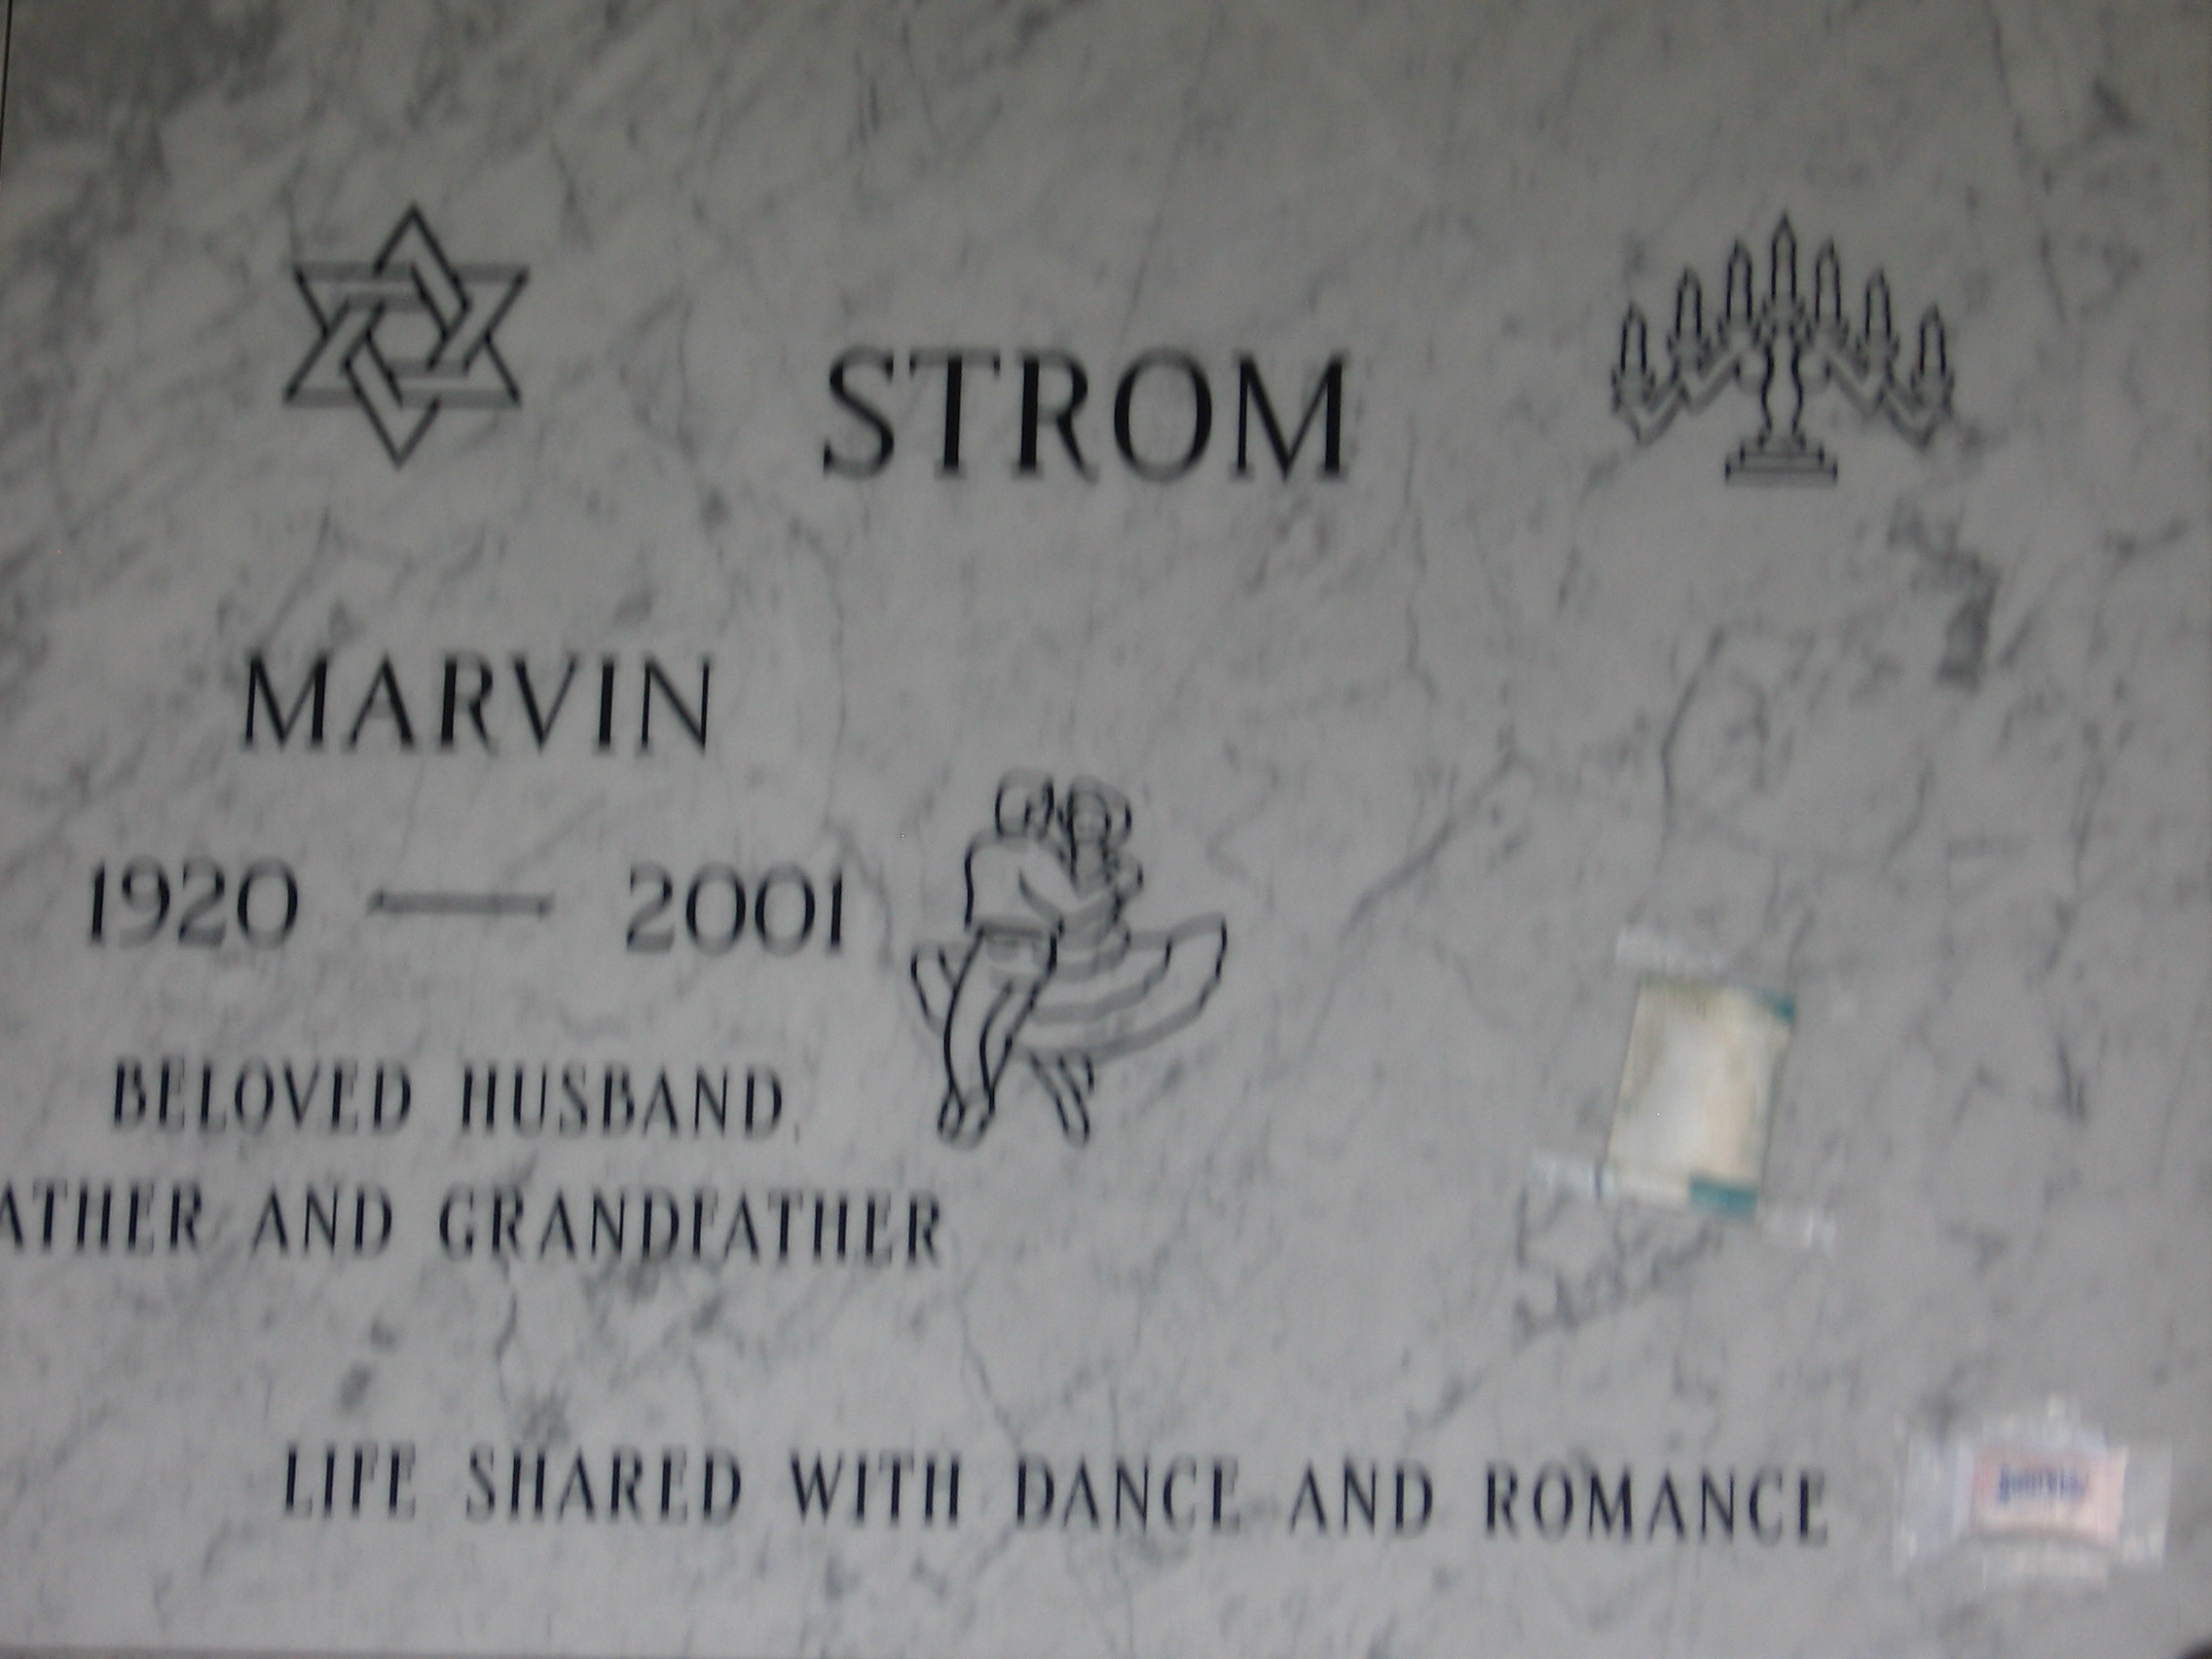 Marvin Strom